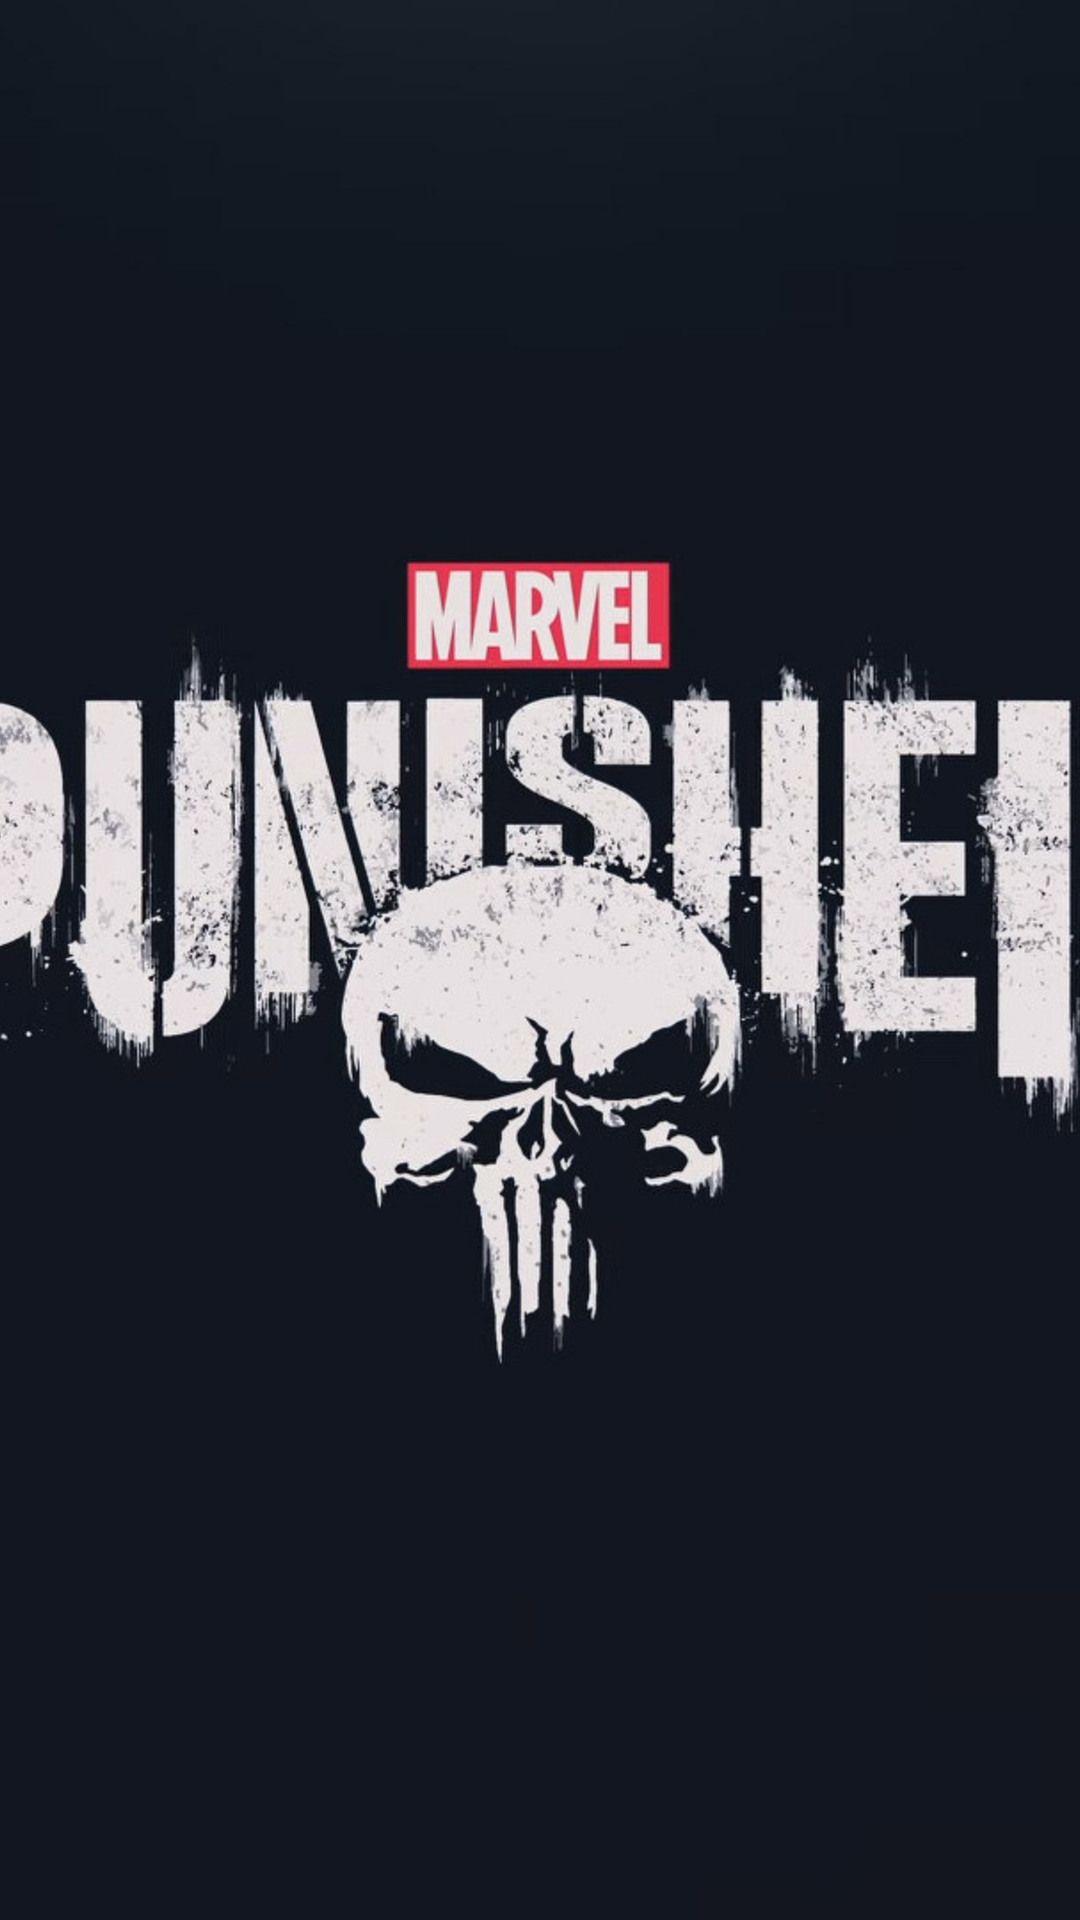 1080x1920 The Punisher 2017 HD Logo Iphone 7,6s,6 Plus, Pixel xl